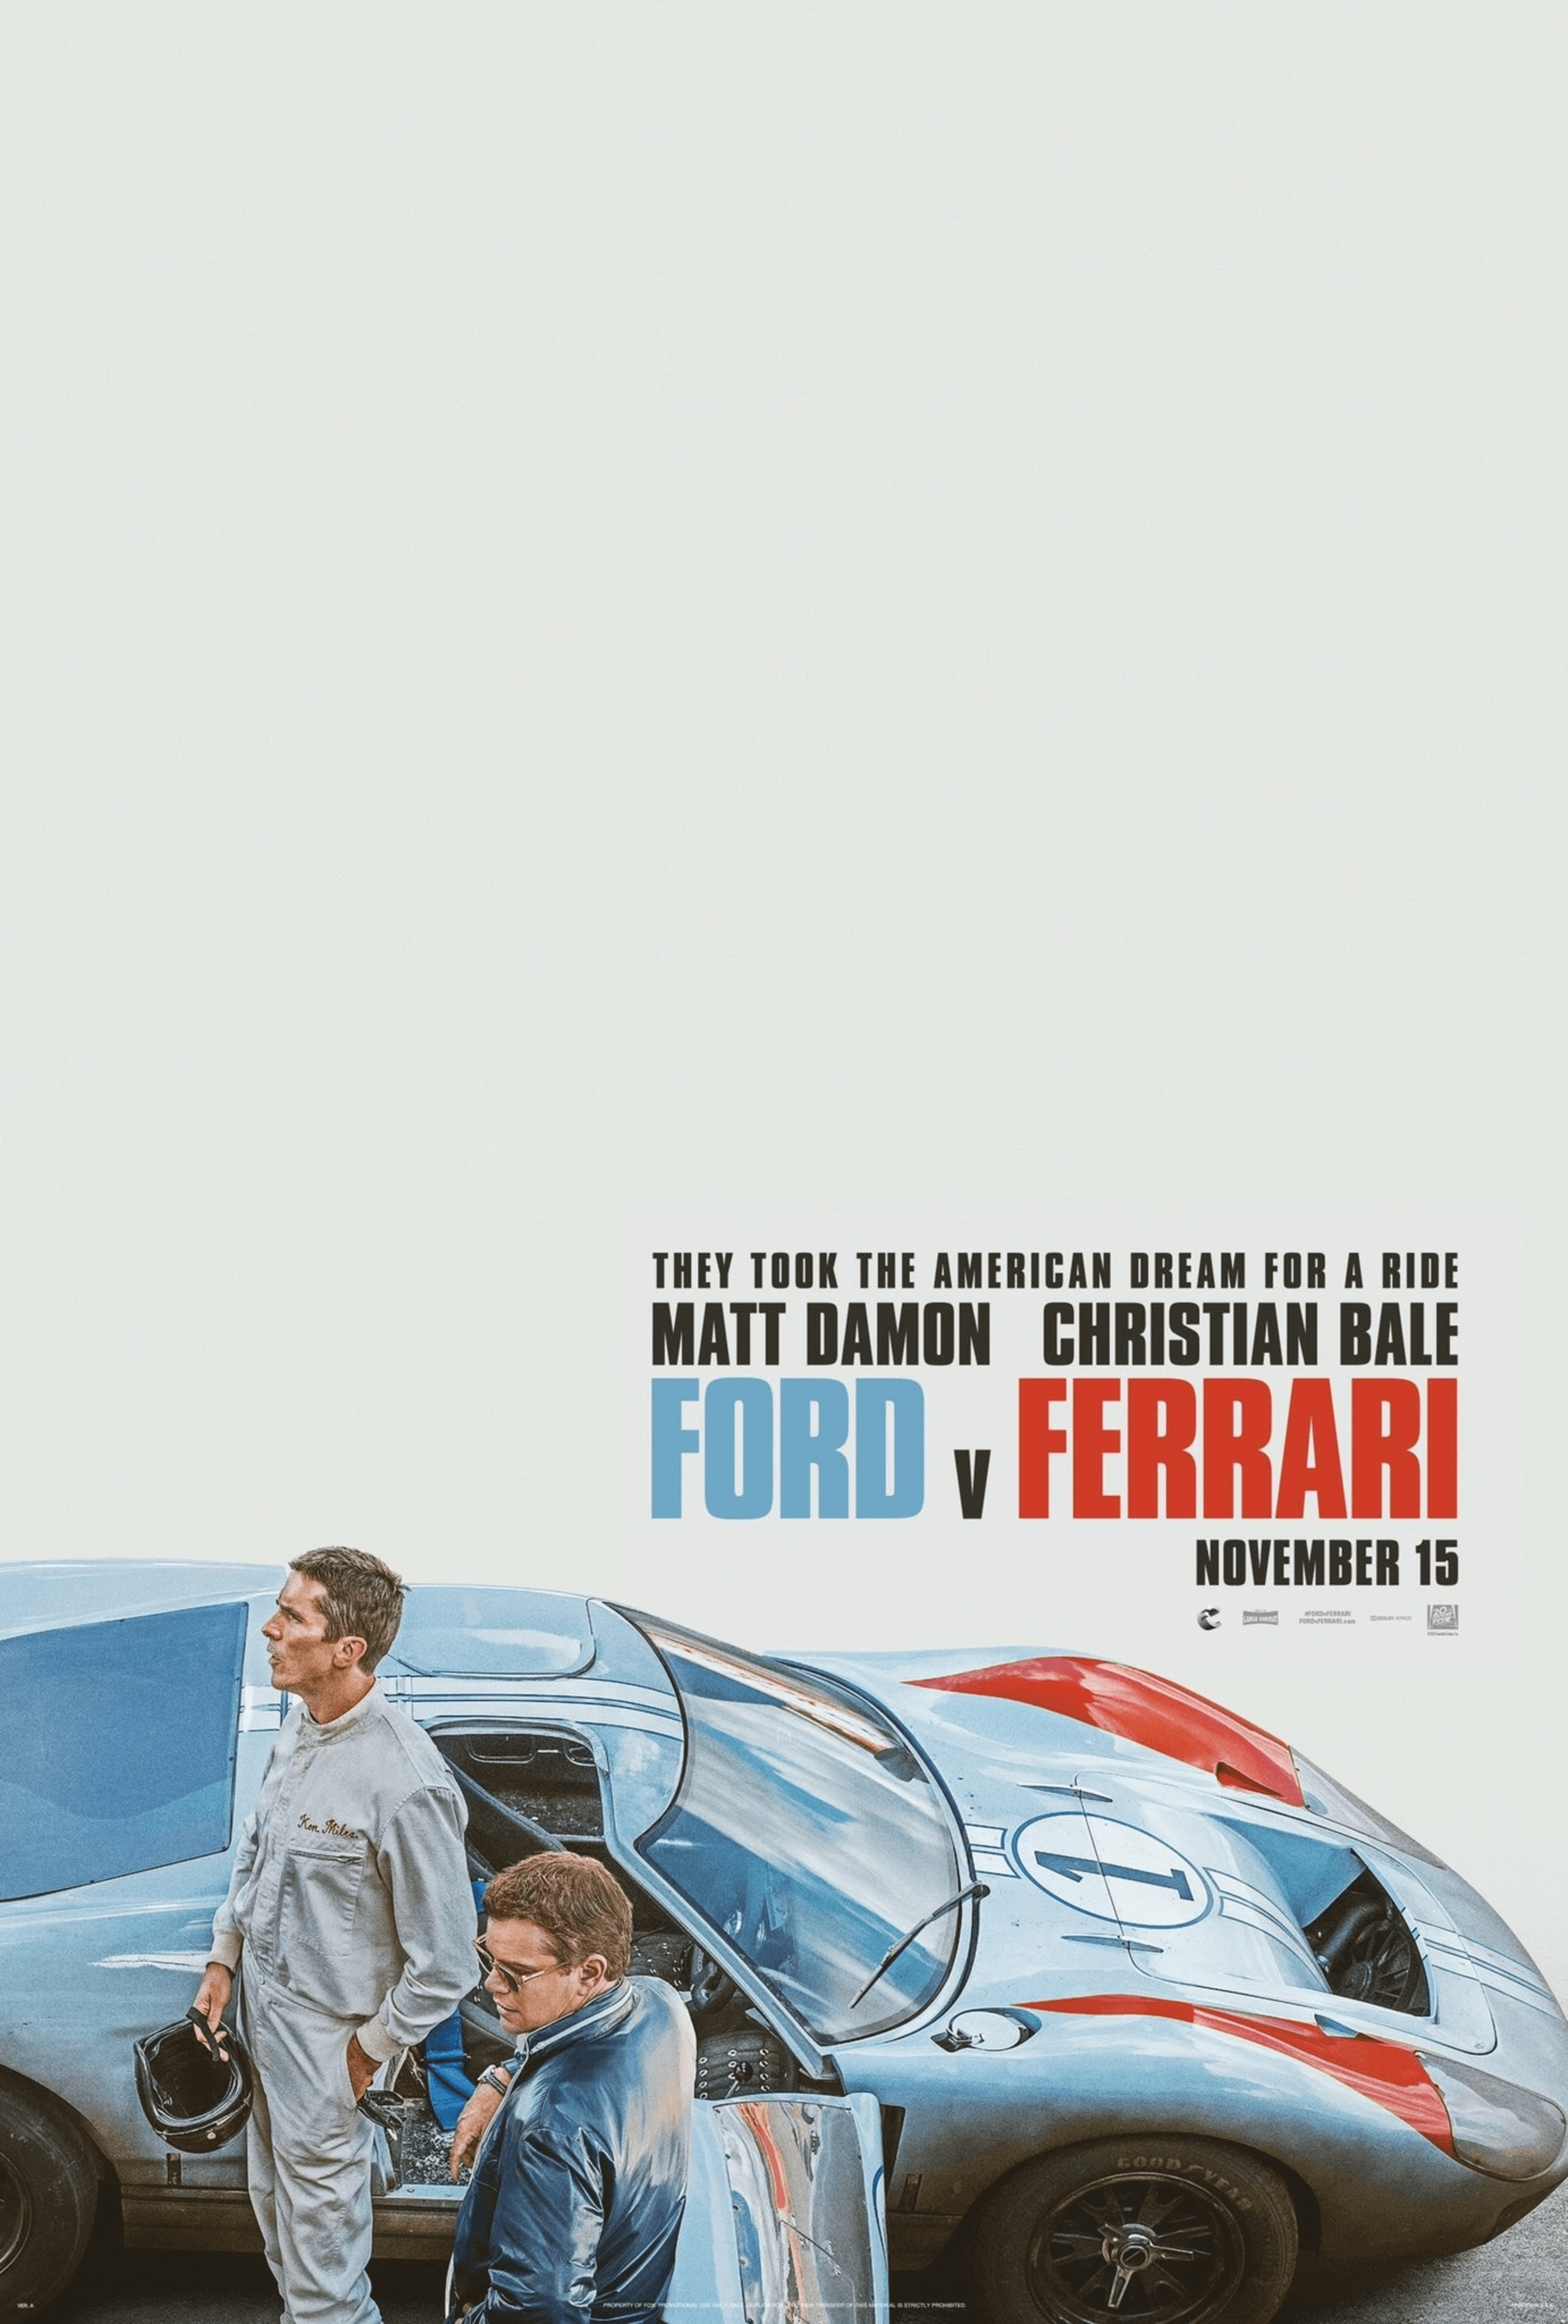 Ford v Ferrari (2019) [2764 4096]. Ferrari, Christian bale